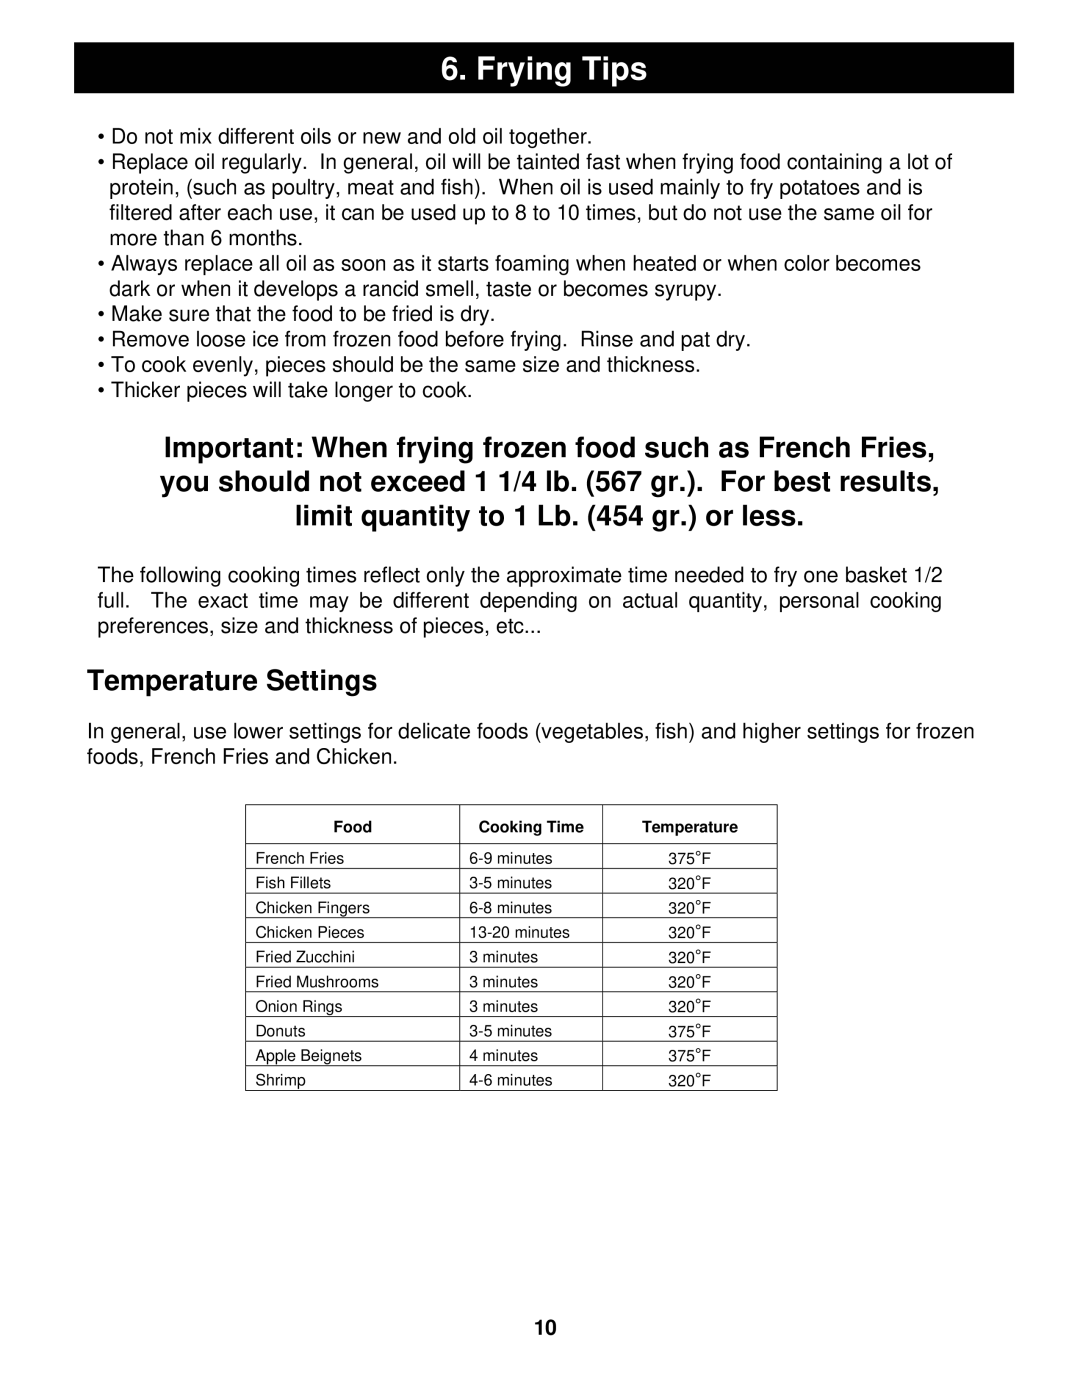 Euro-Pro BF160 manual Frying Tips, Temperature Settings 